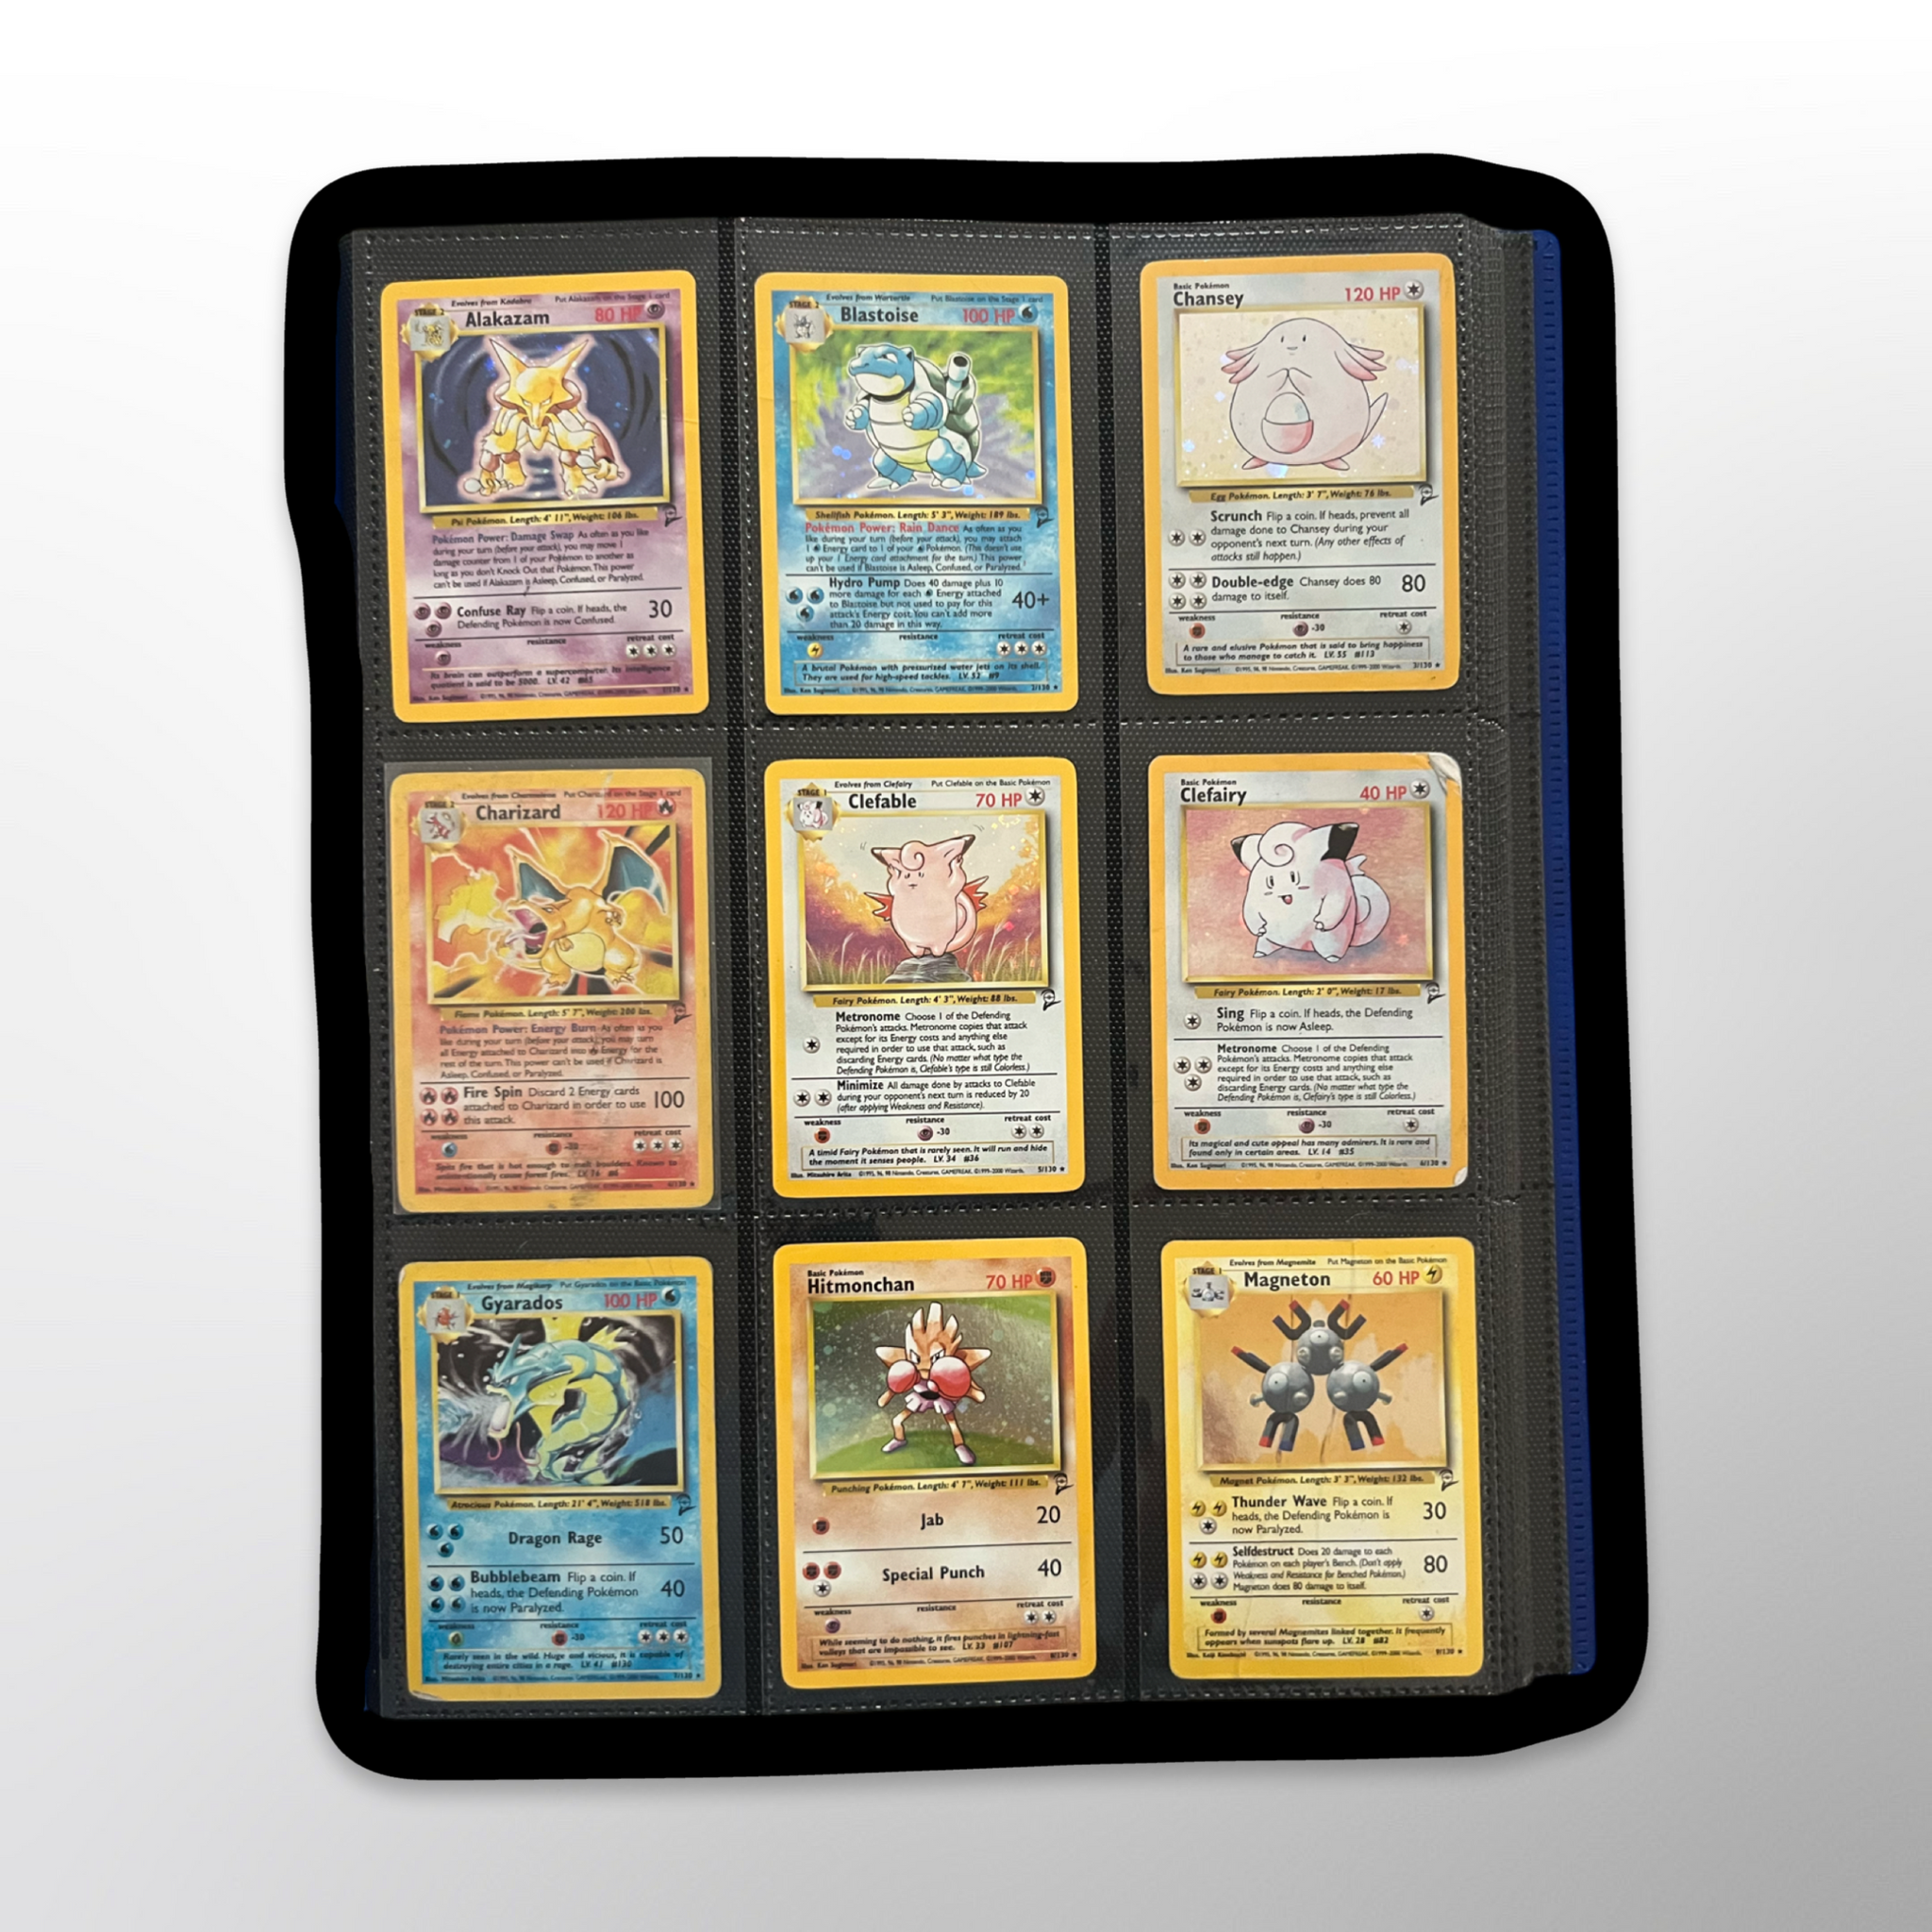 Pokémon TCG Onix Base Set 2 84/130 Regular Unlimited Common HP